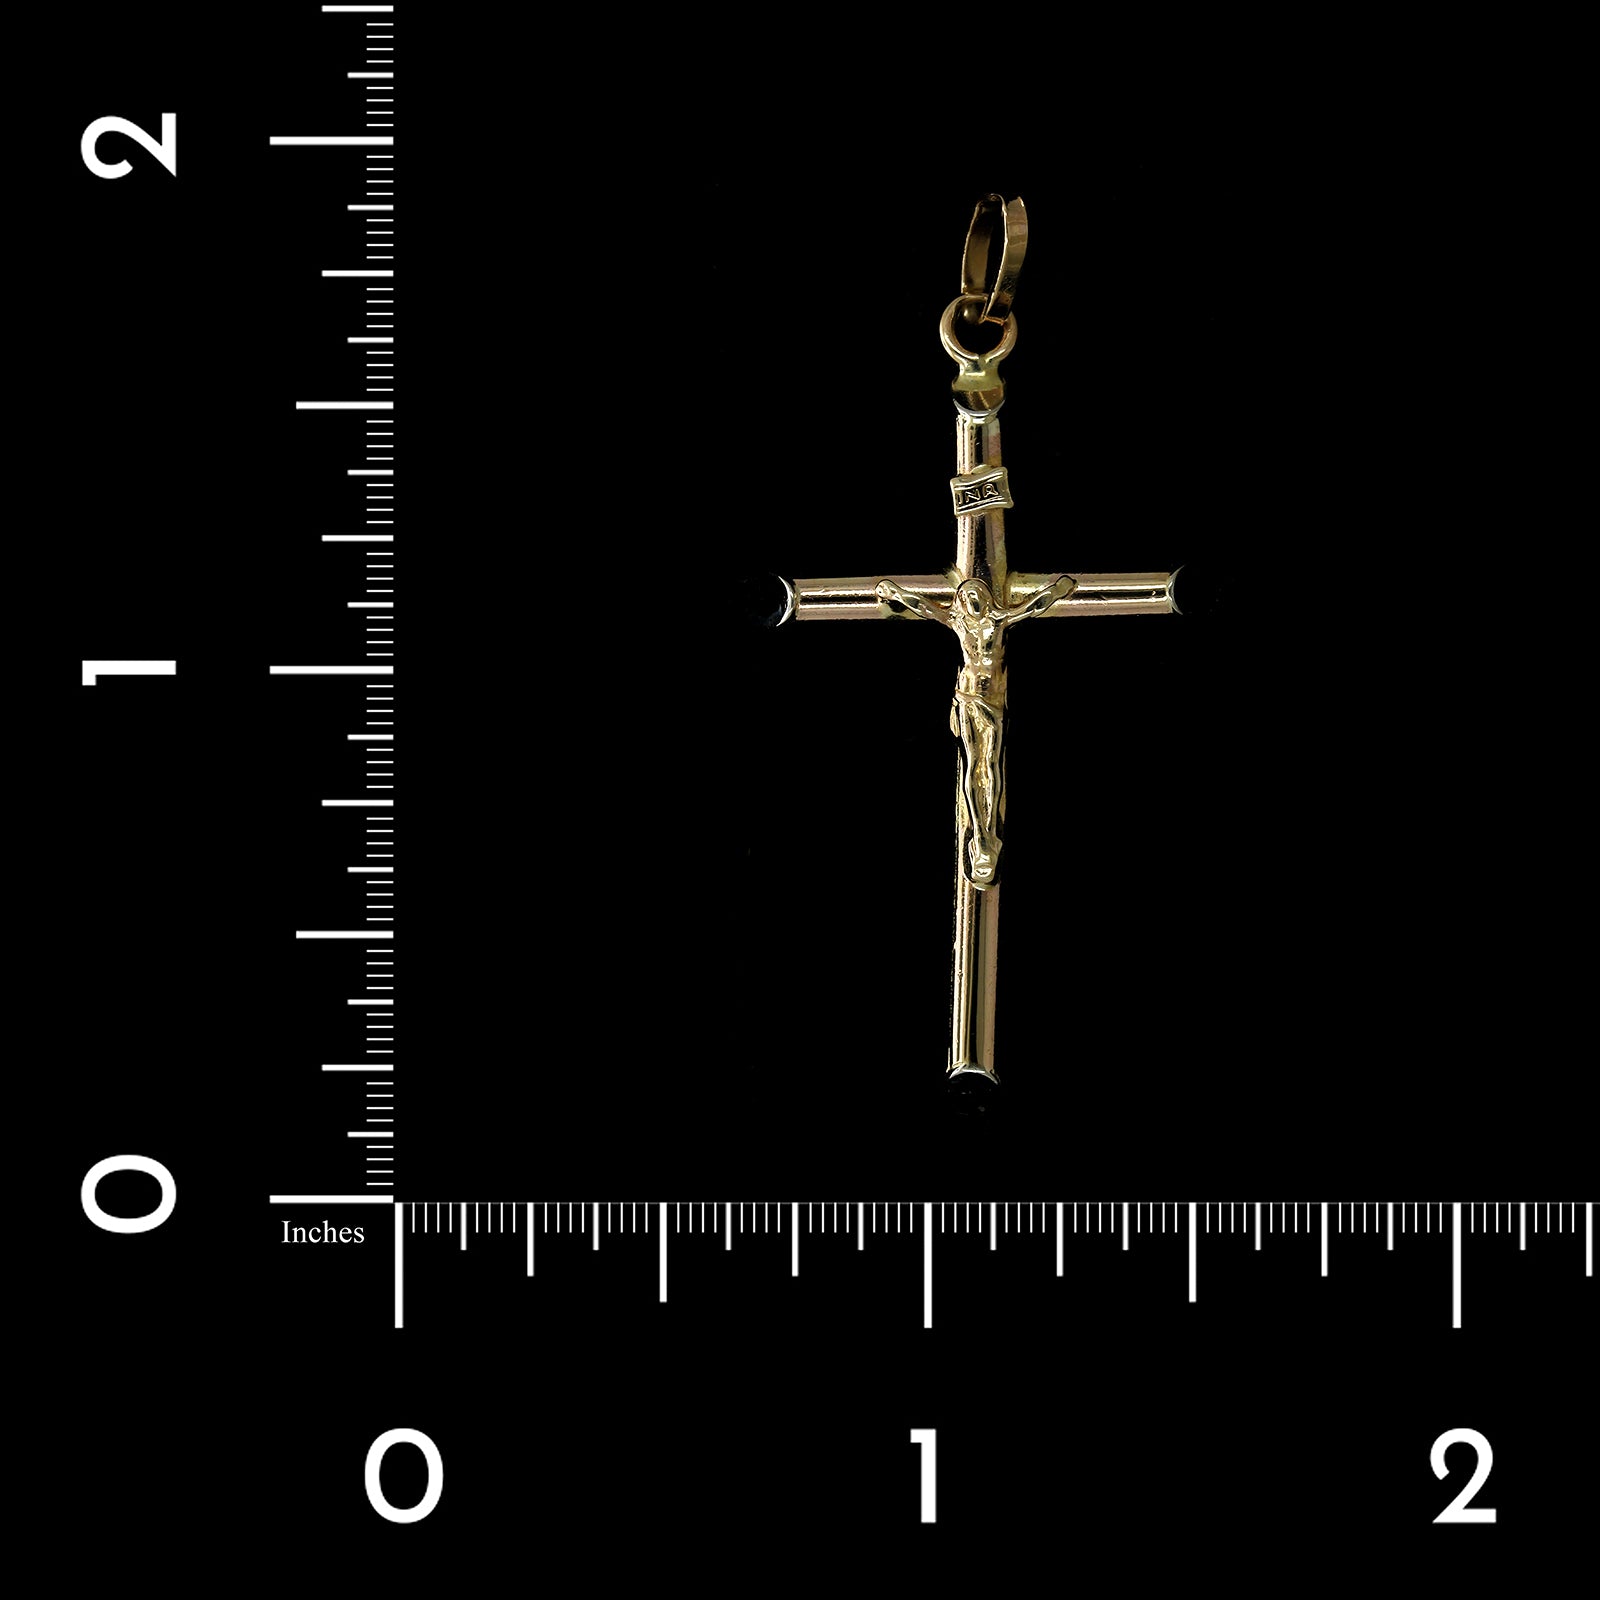 14K Yellow Gold Estate Crucifix Cross Pendant